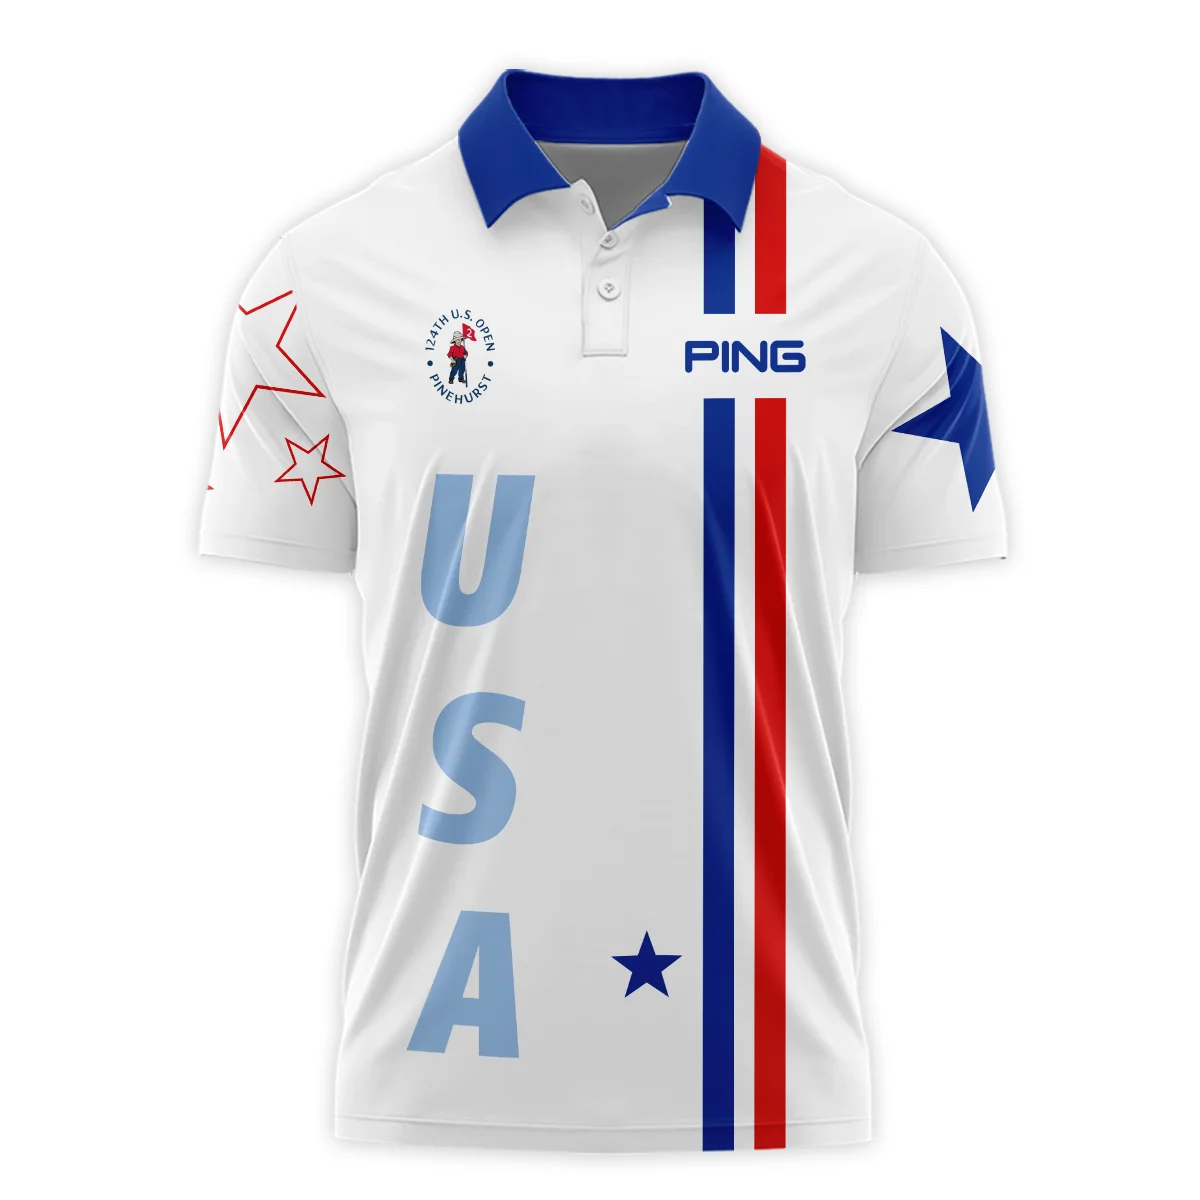 124th U.S. Open Pinehurst Ping Blue Red Line White Polo Shirt Style Classic Polo Shirt For Men